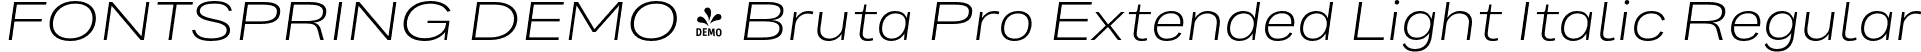 FONTSPRING DEMO - Bruta Pro Extended Light Italic Regular font | Fontspring-DEMO-brutaproextended-lightitalic.otf